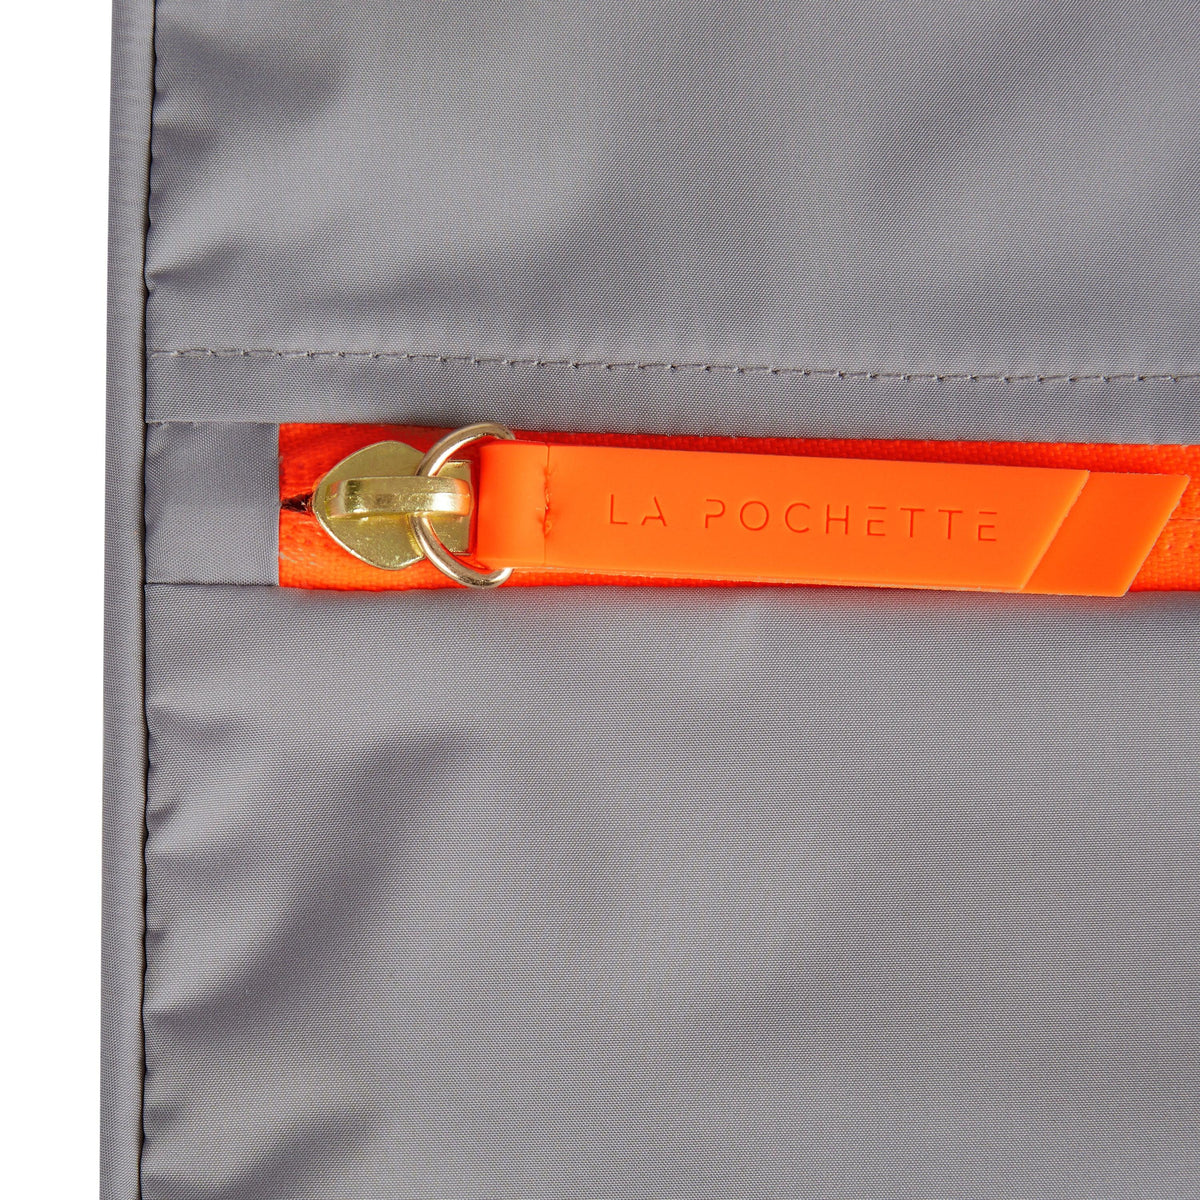 La Pochette zip detail on the Shadow Neon Orange Sweat Bag